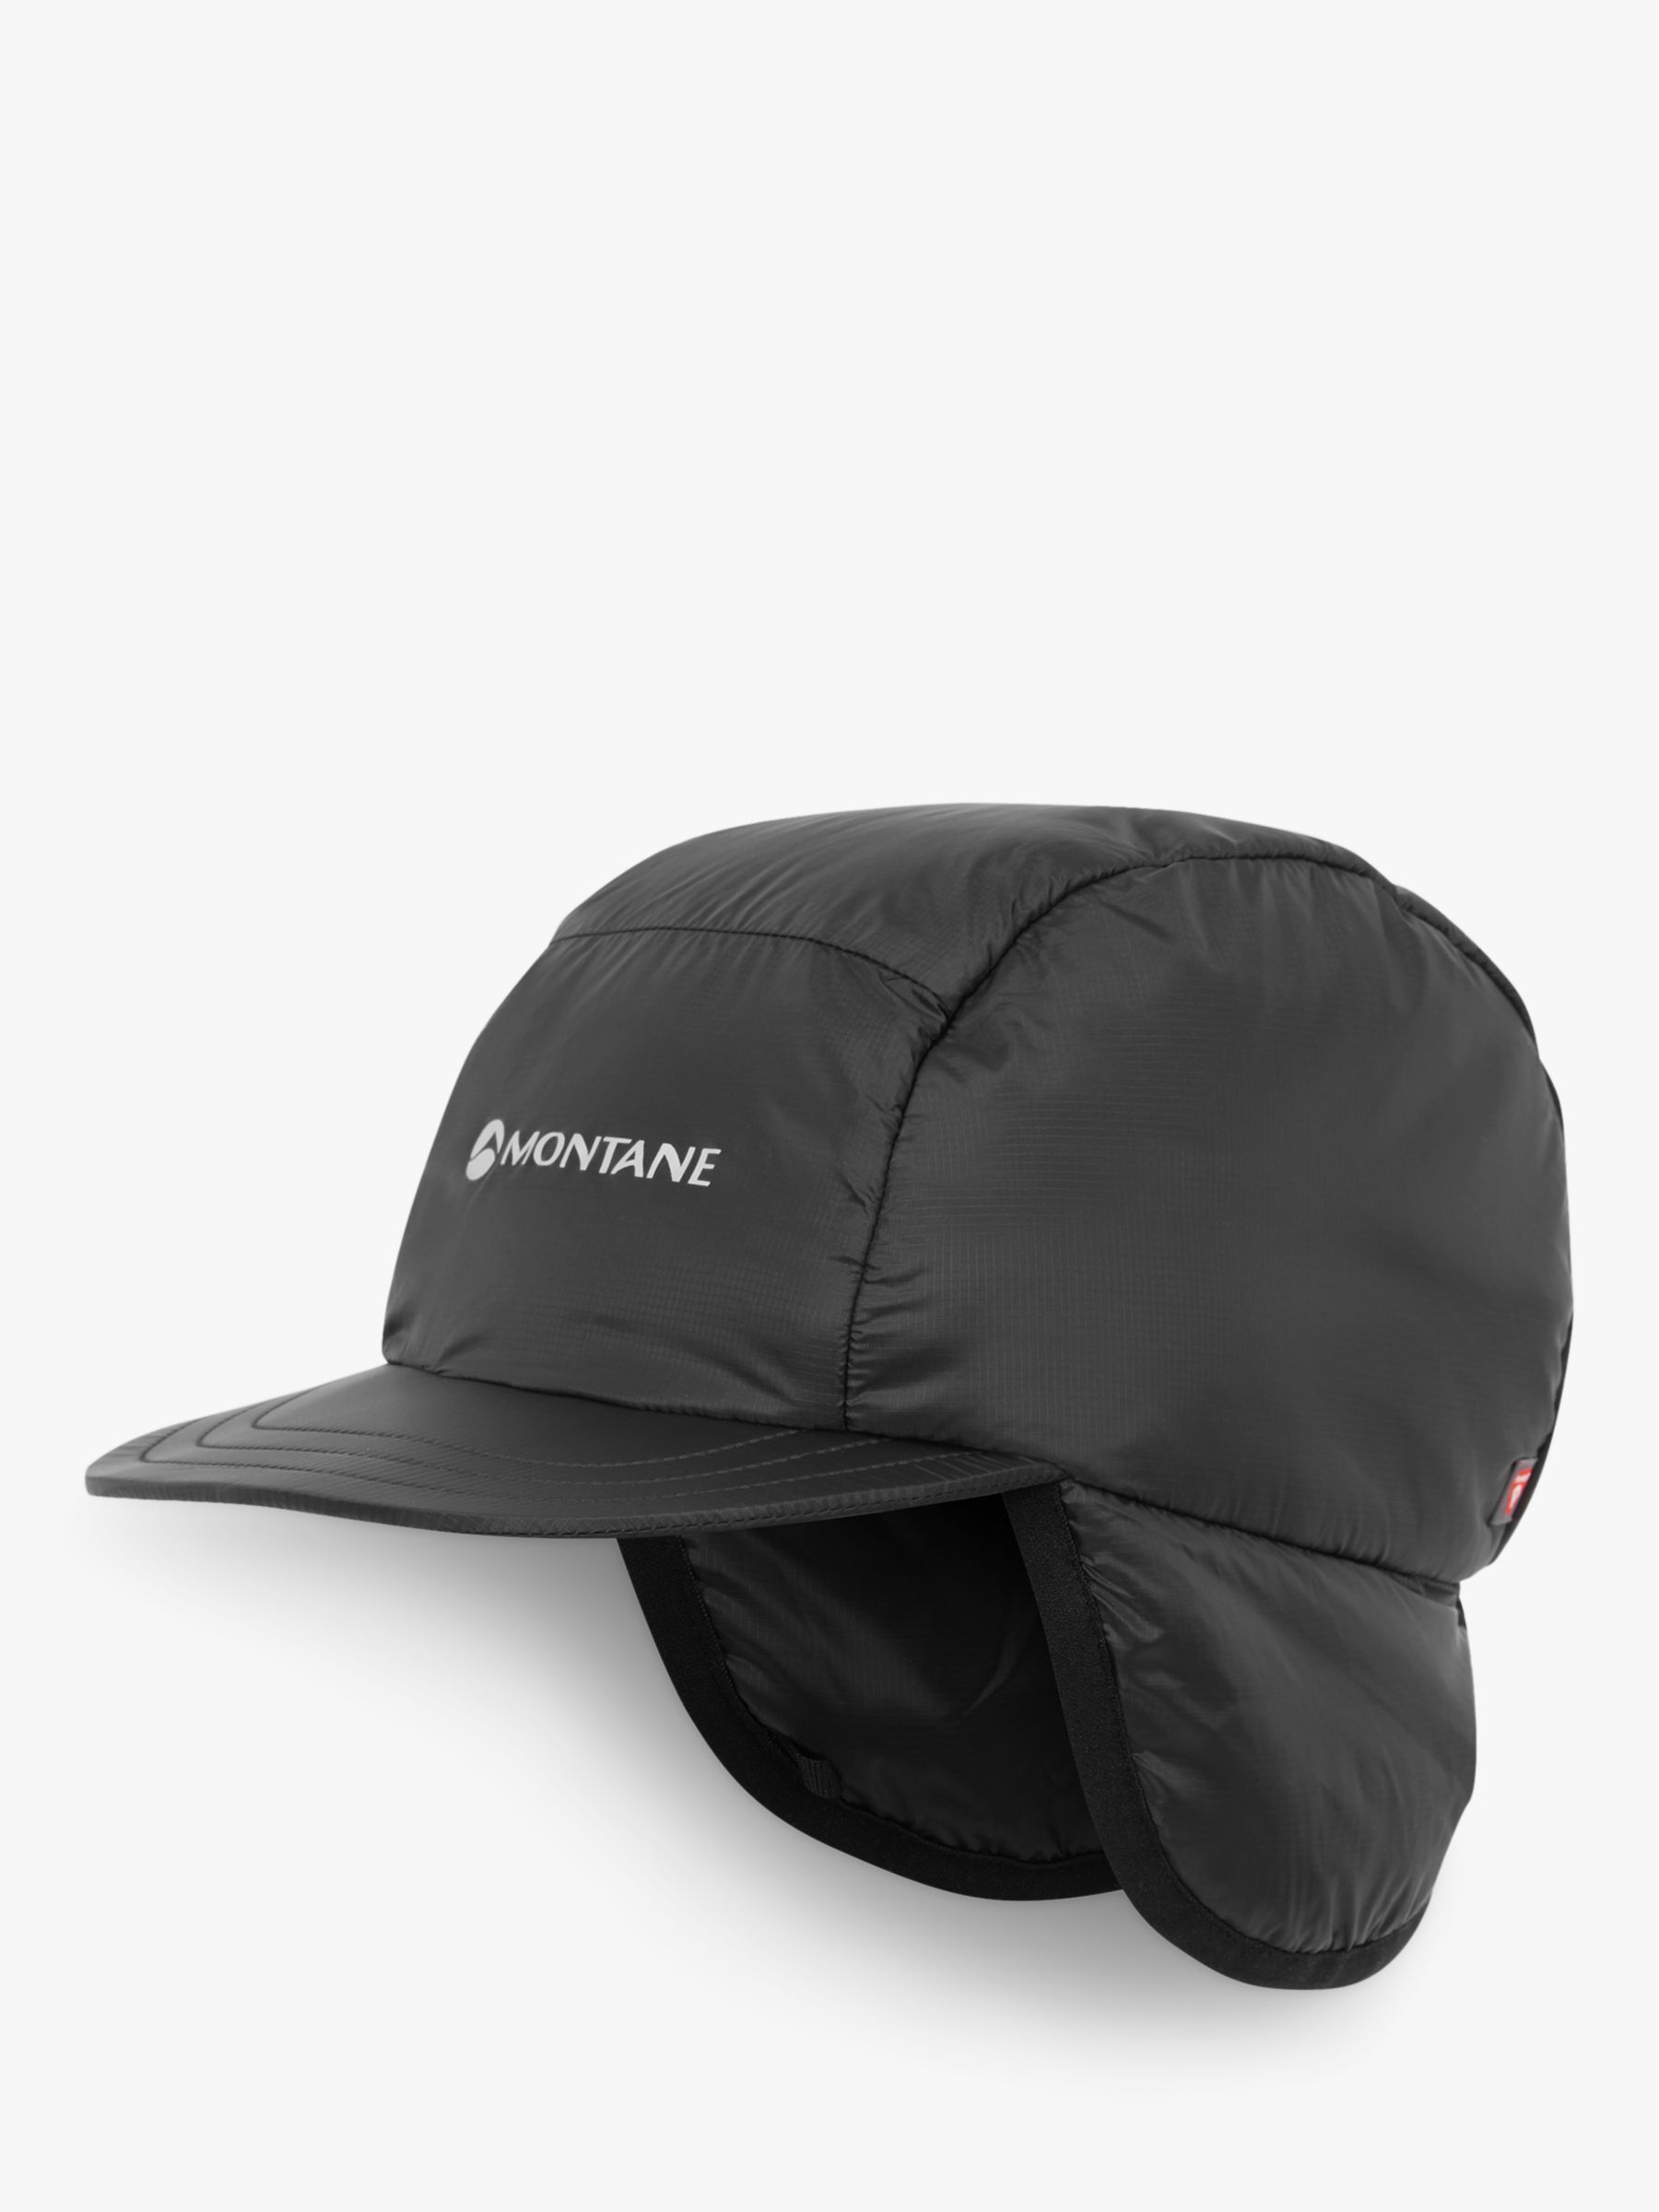 Montane Insulated Mountain Cap, Black, S